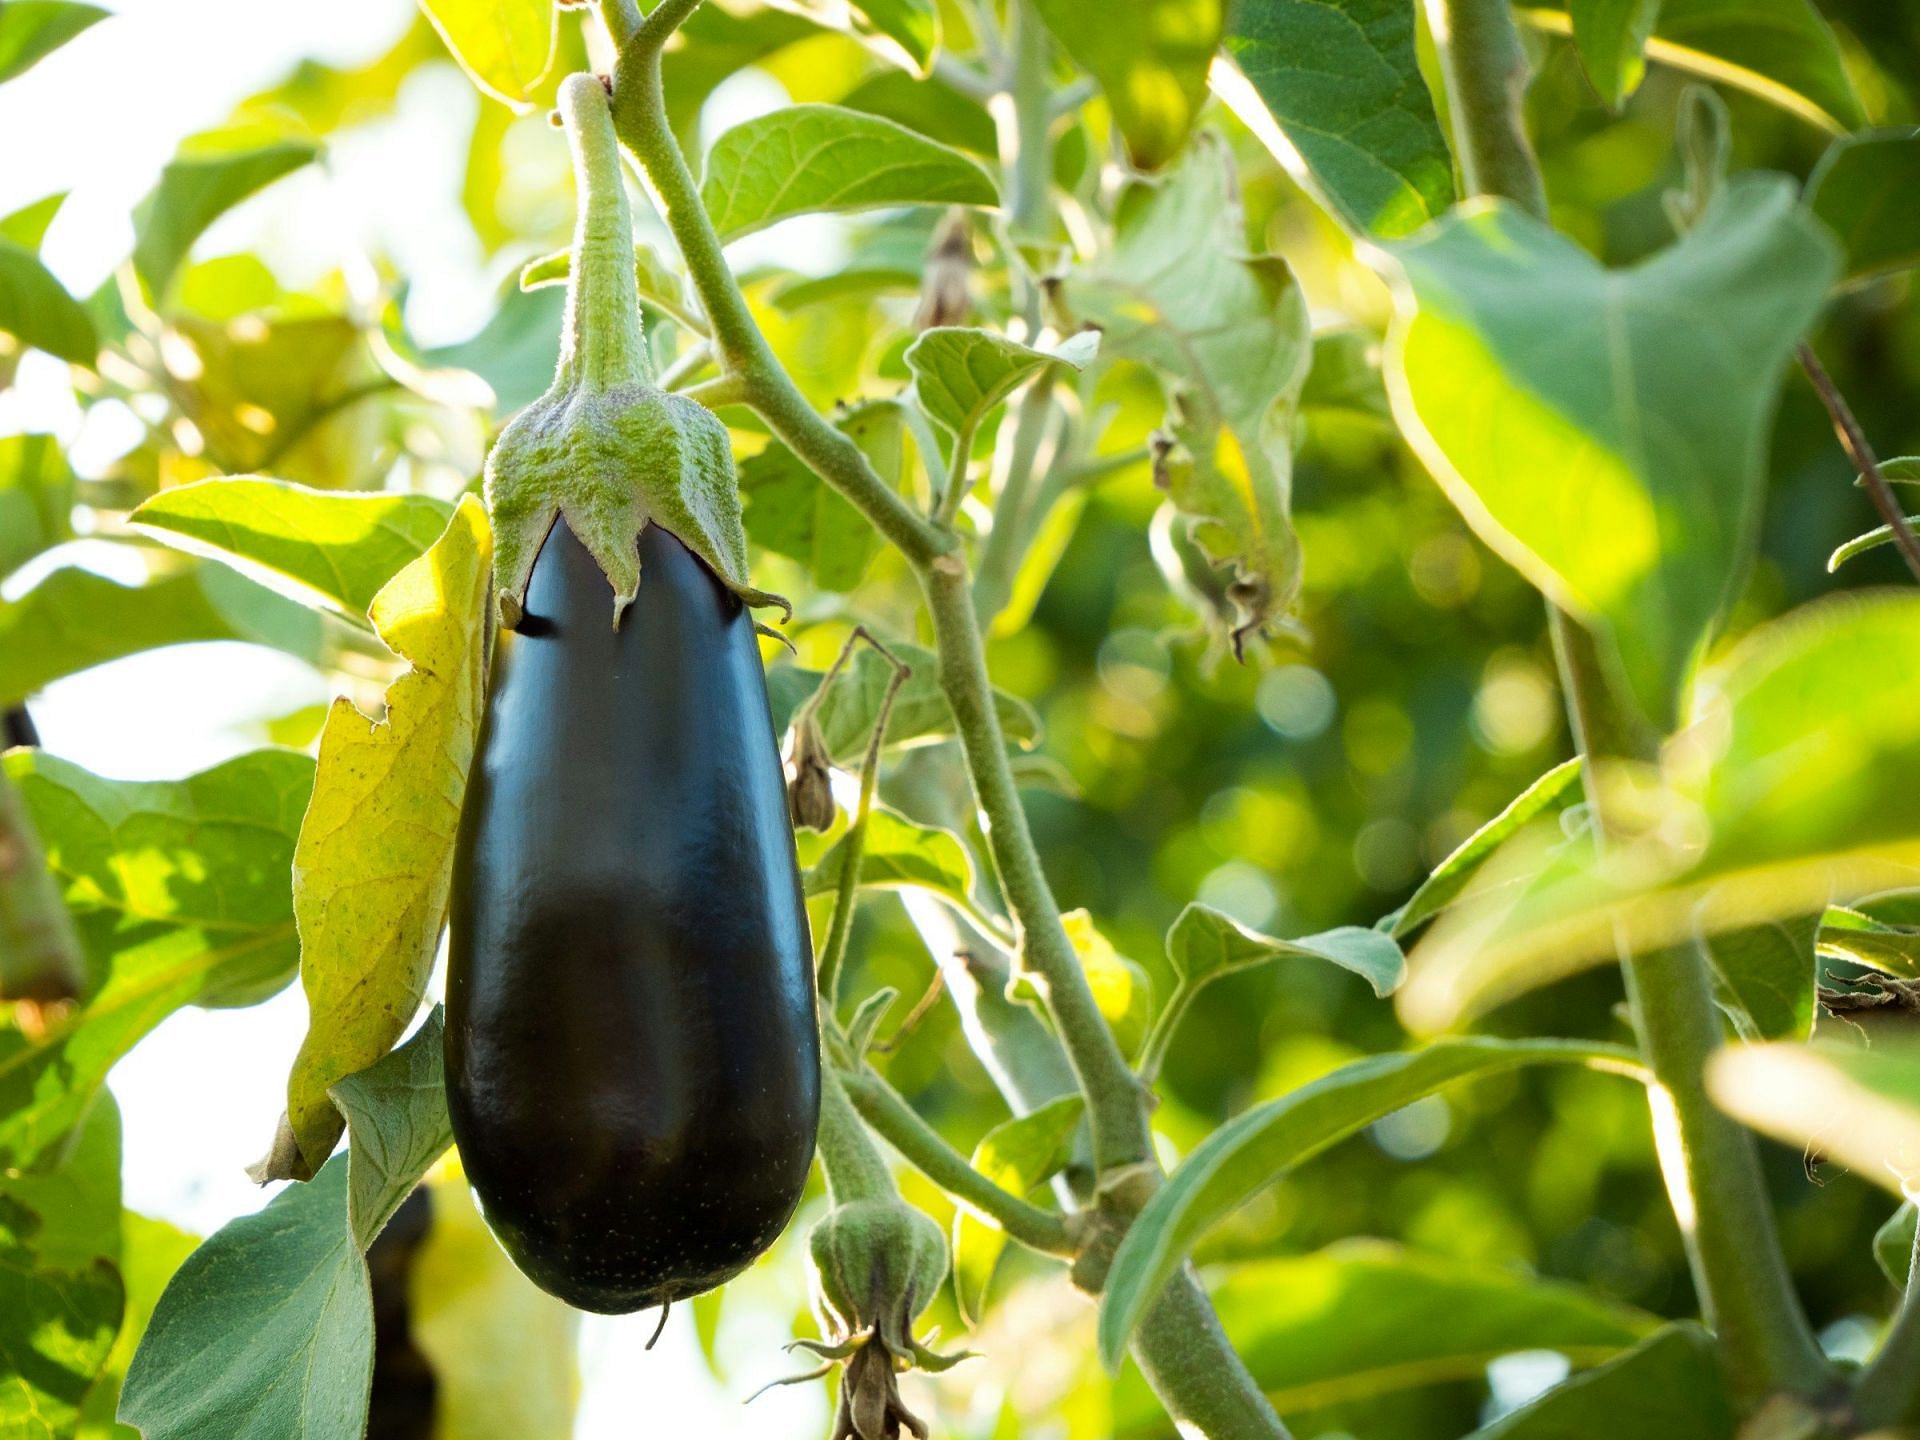 Eggplant health benefits (Image via Unsplash/Dan Cristian)